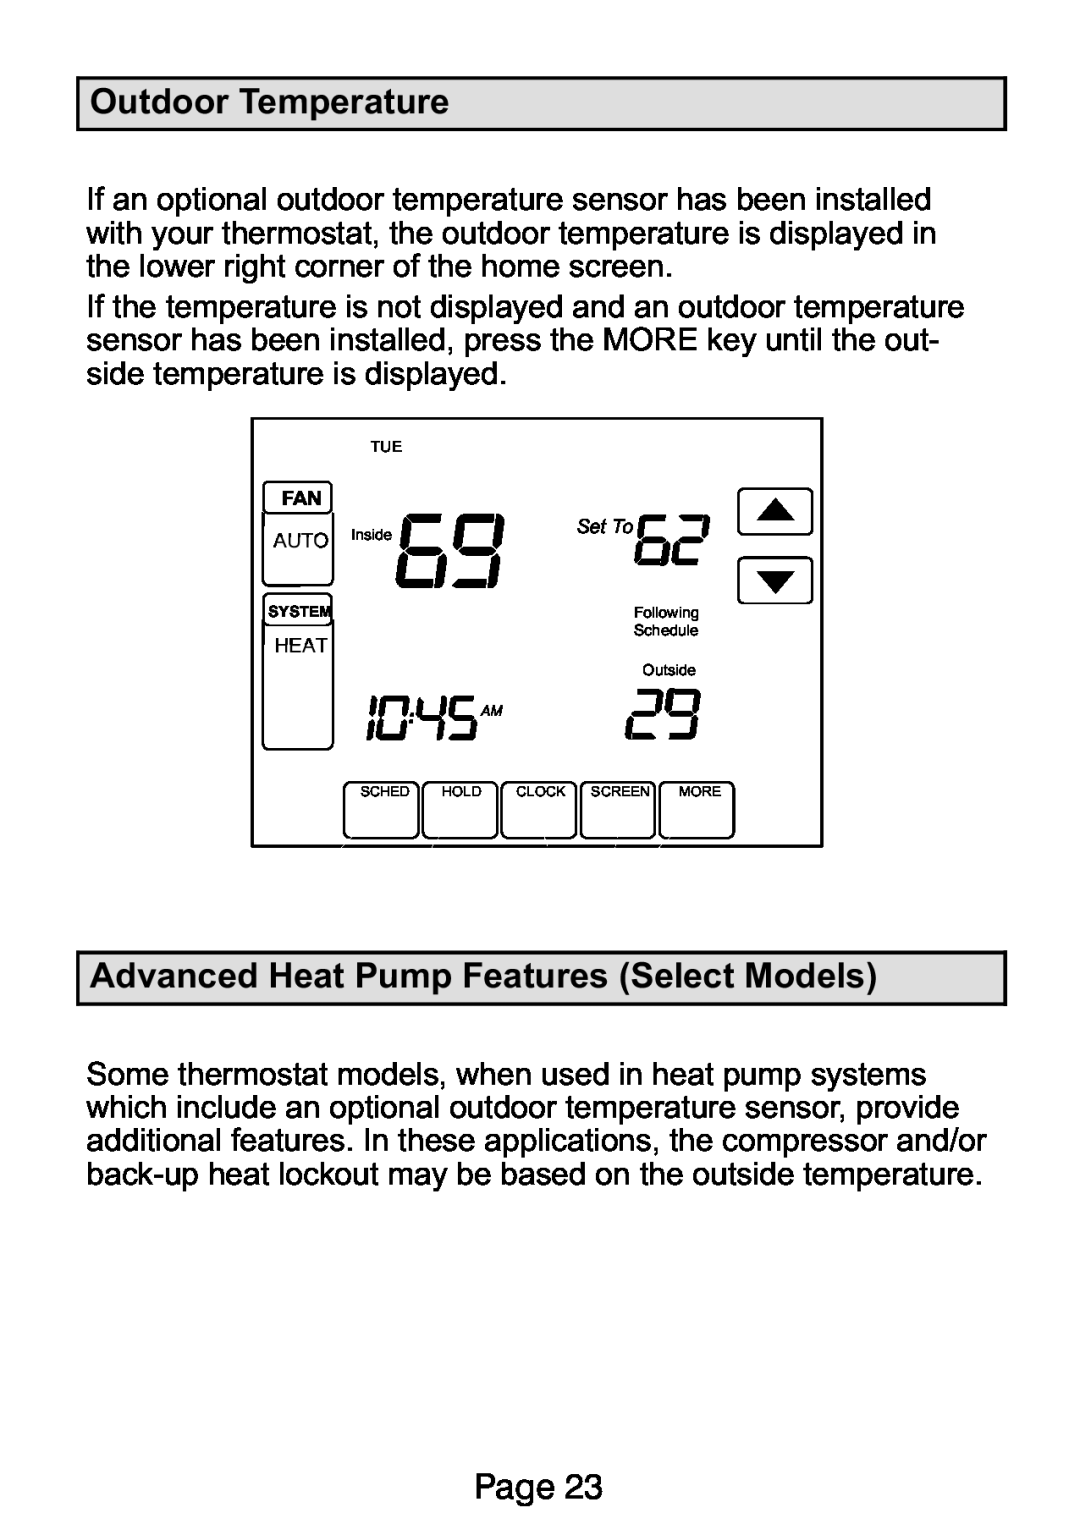 Lennox International Inc Ellite Series manual Outdoor Temperature, Advanced Heat Pump Features Select Models, Page 